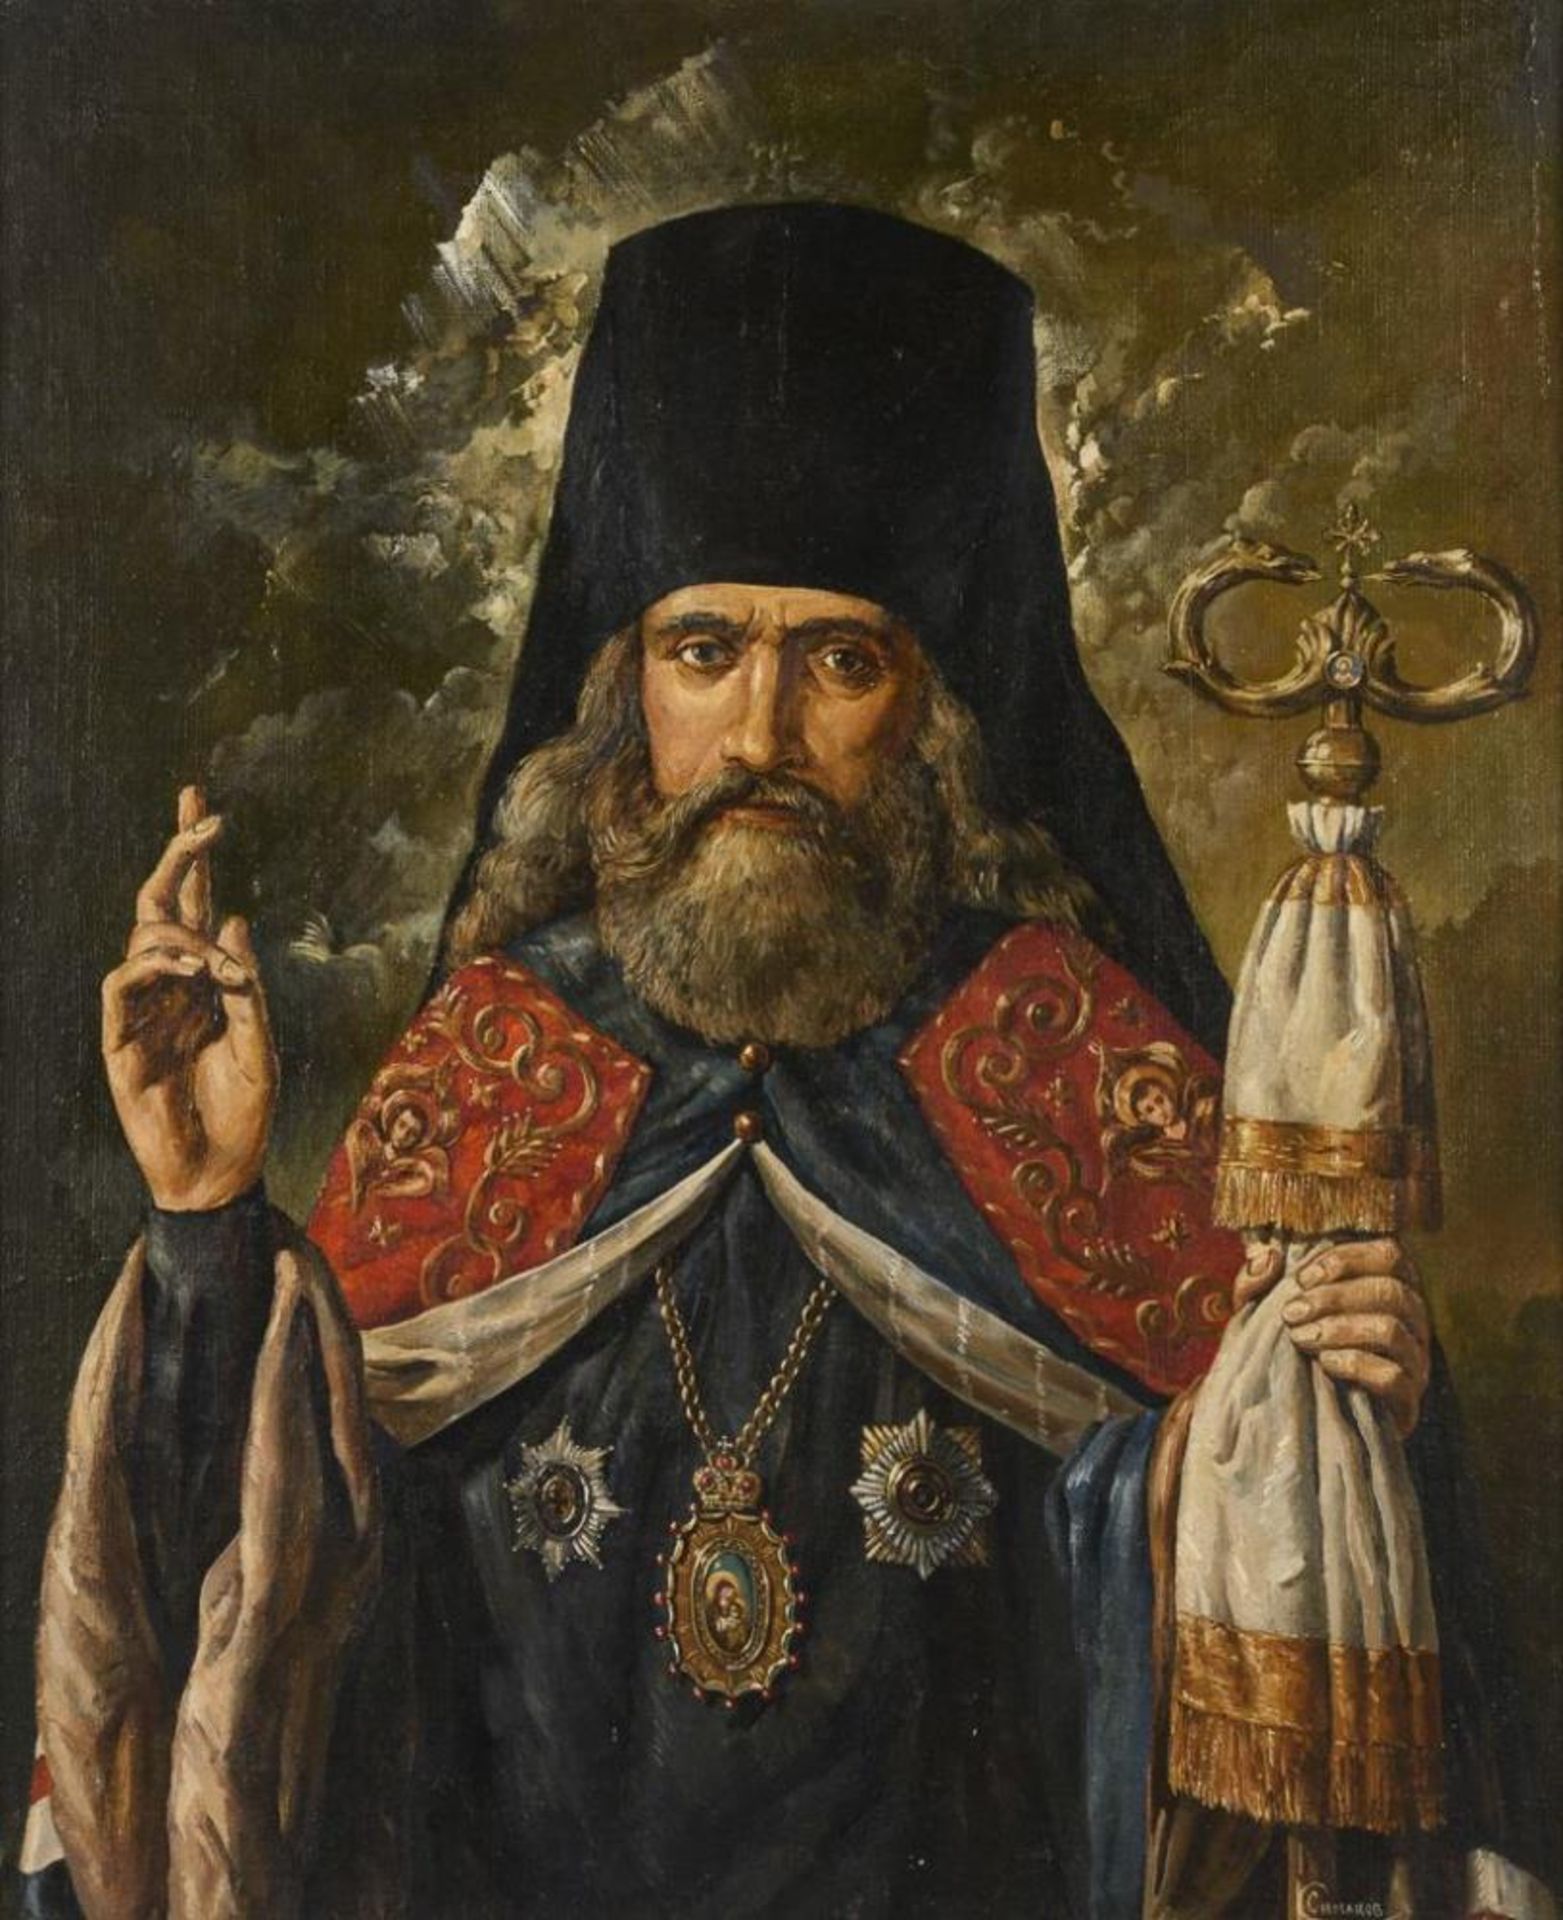 SIMAKOV, Sergey Borisovich (Симаков, Сергей Борисович) (* 1949 Moskau). "Porträt des Bischofs Agafan